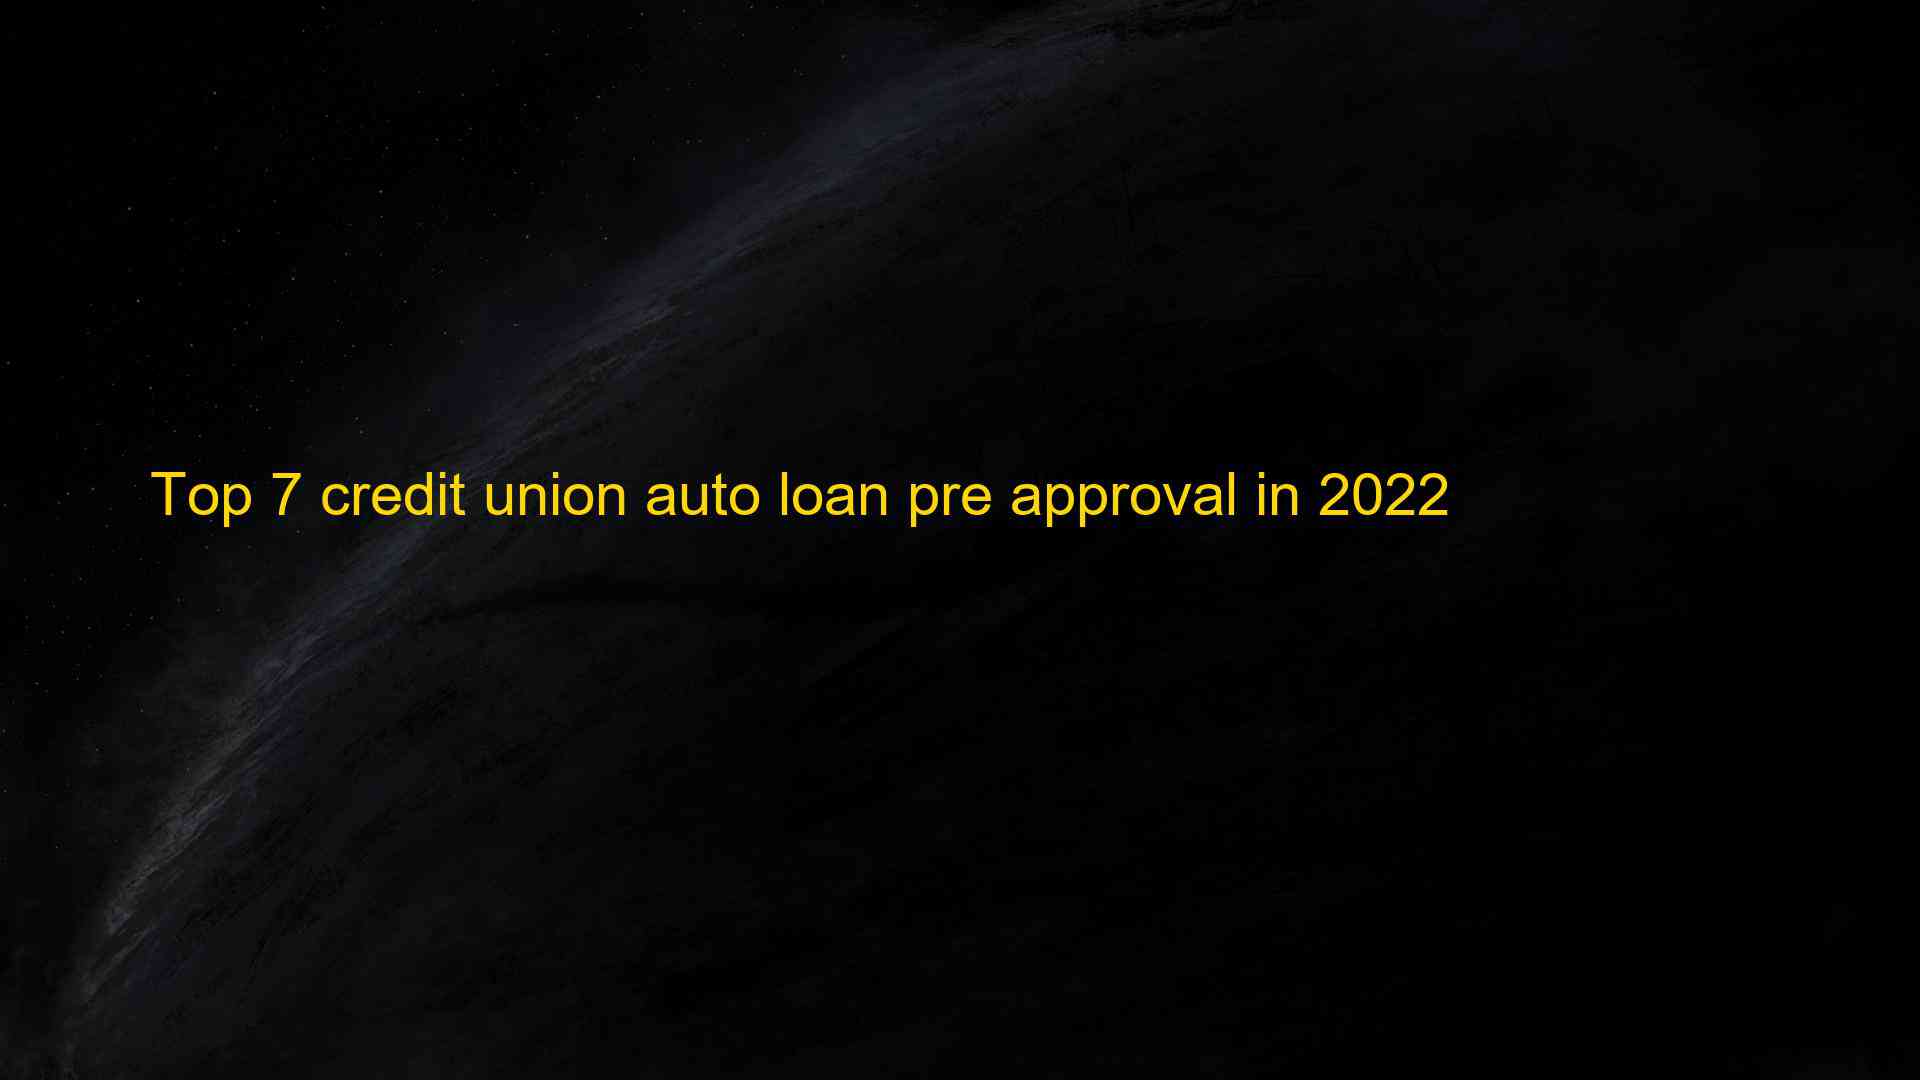 Top 7 credit union auto loan pre approval in 2022 1660243476